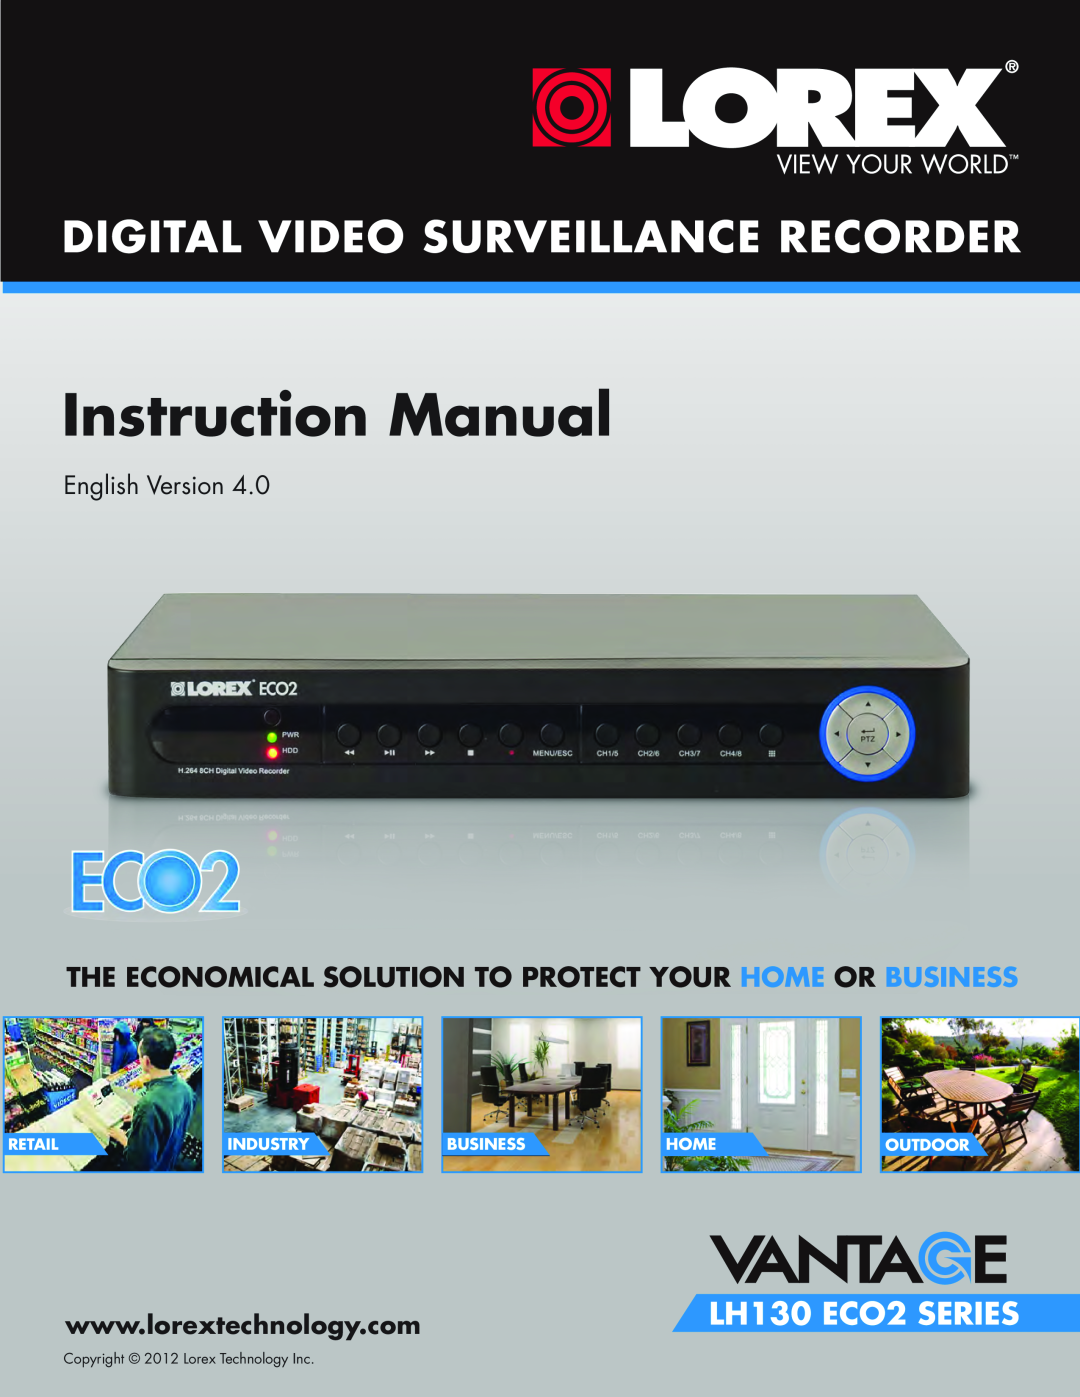 LOREX Technology instruction manual Instruction Manual, Digital Video Surveillance Recorder, LH130 ECO2 SERIES, Home 